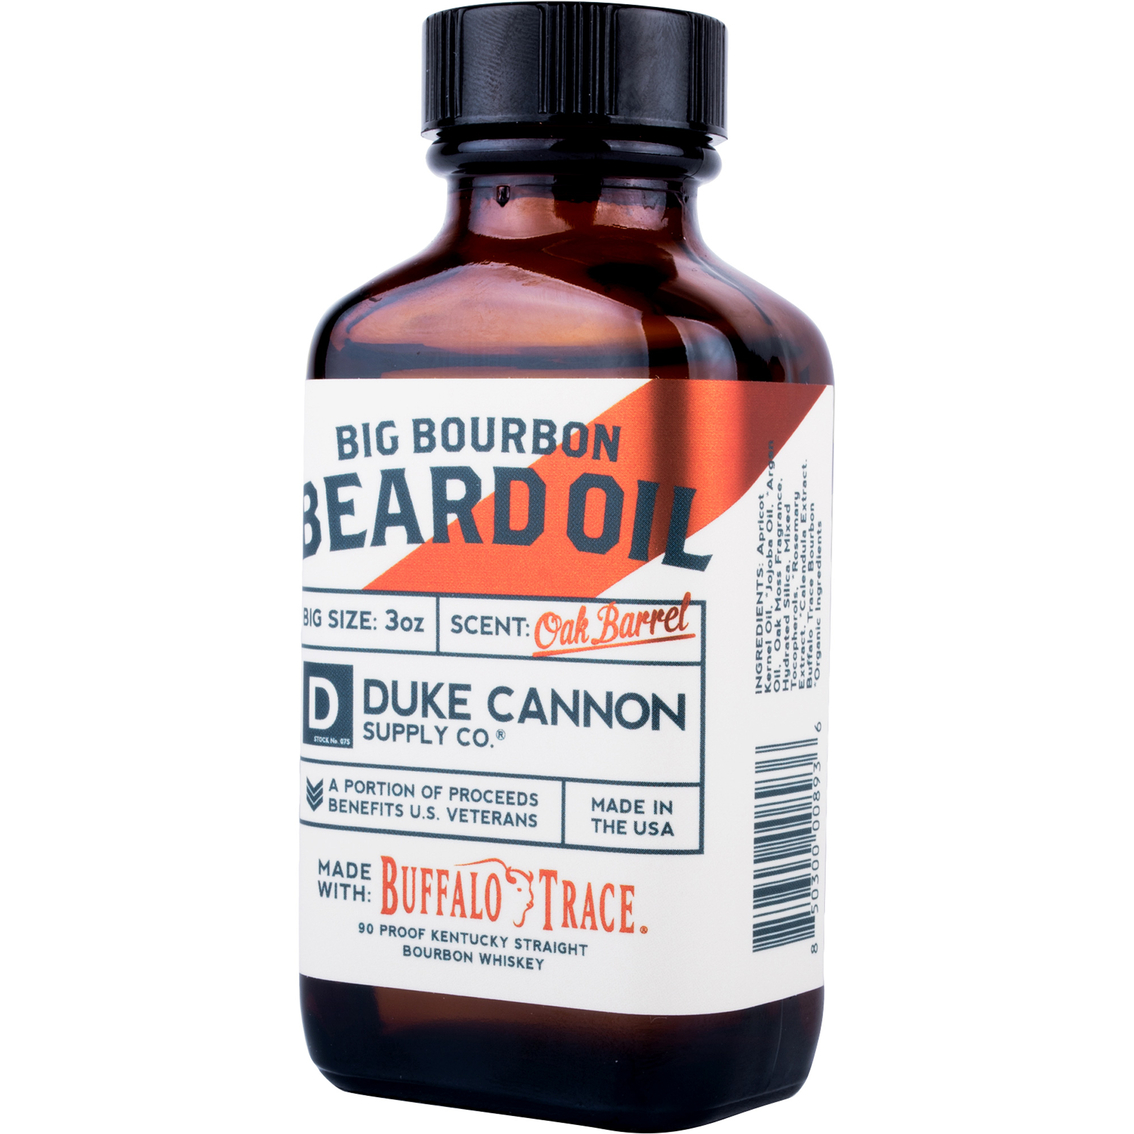 Duke Cannon Big Bourbon Beard Oil - Image 3 of 3